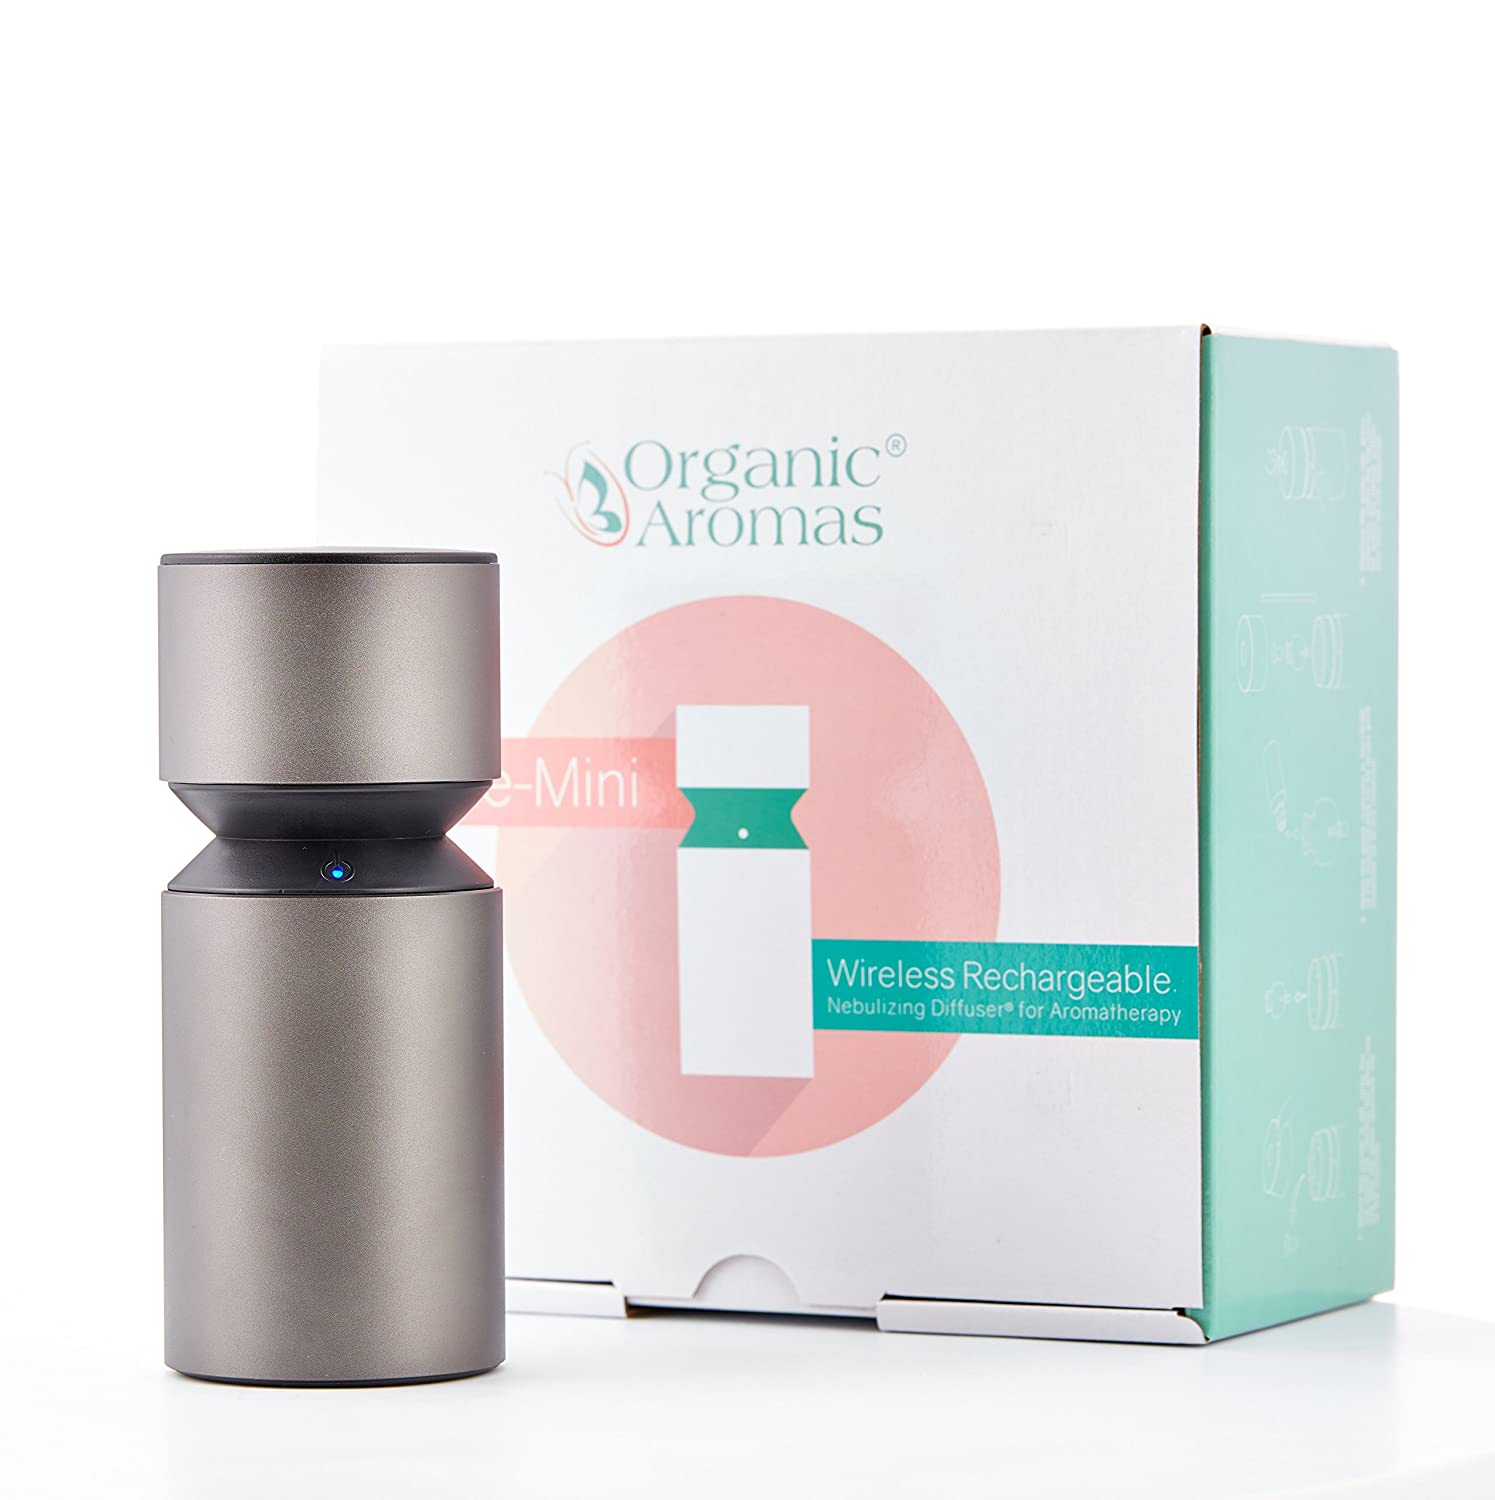 Organic Aromas Mobile-Mini 2.0 Wireless Rechargeable Nebulizing Diffuser